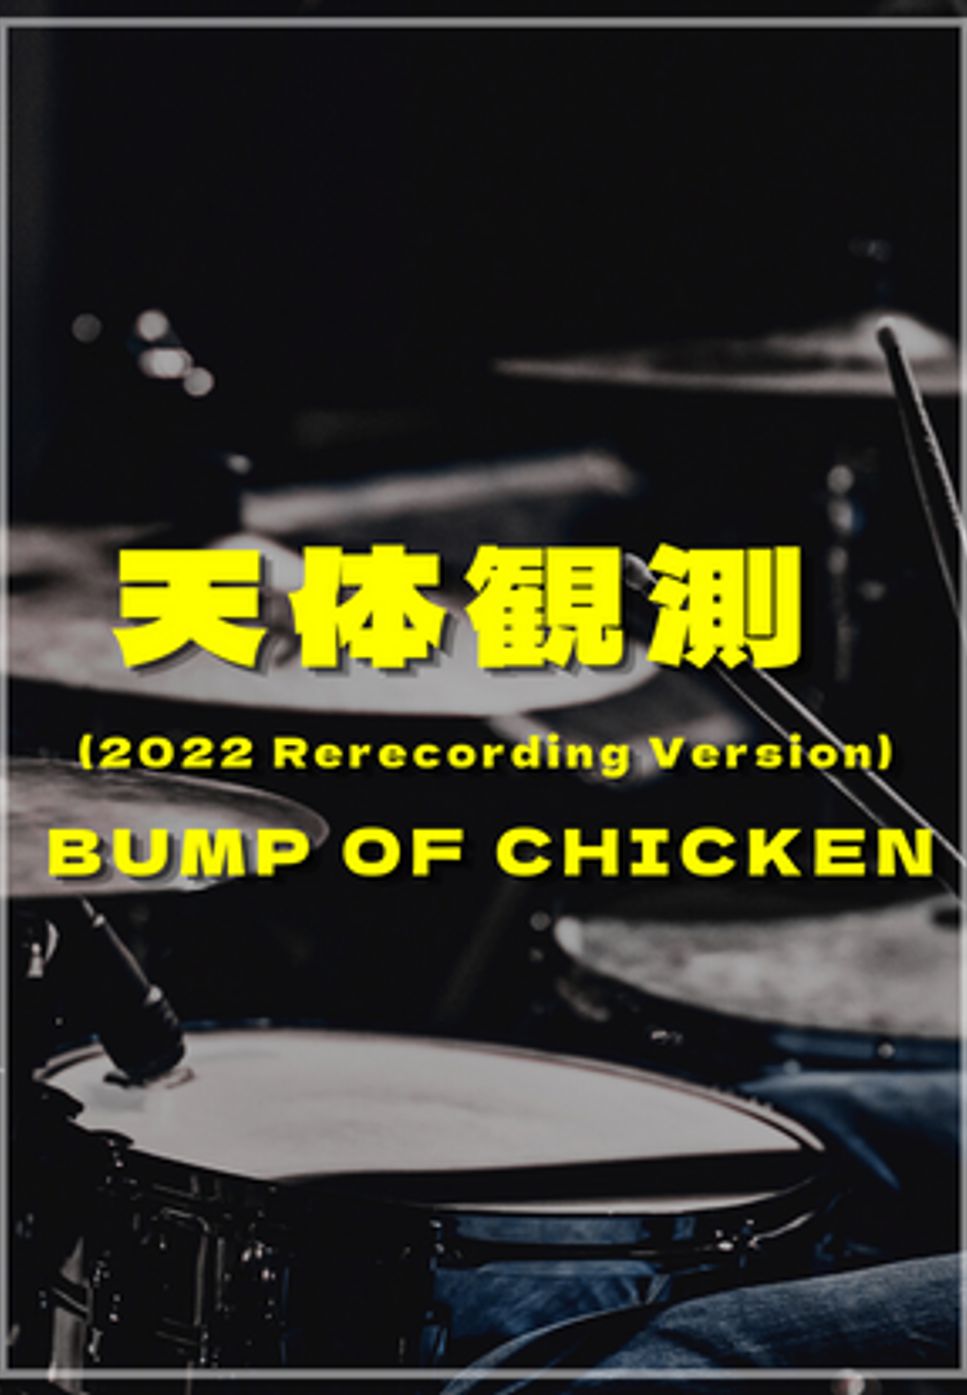 BUMP OF CHICKEN - 天体観測 (2022 Rerecording Version) by DSU